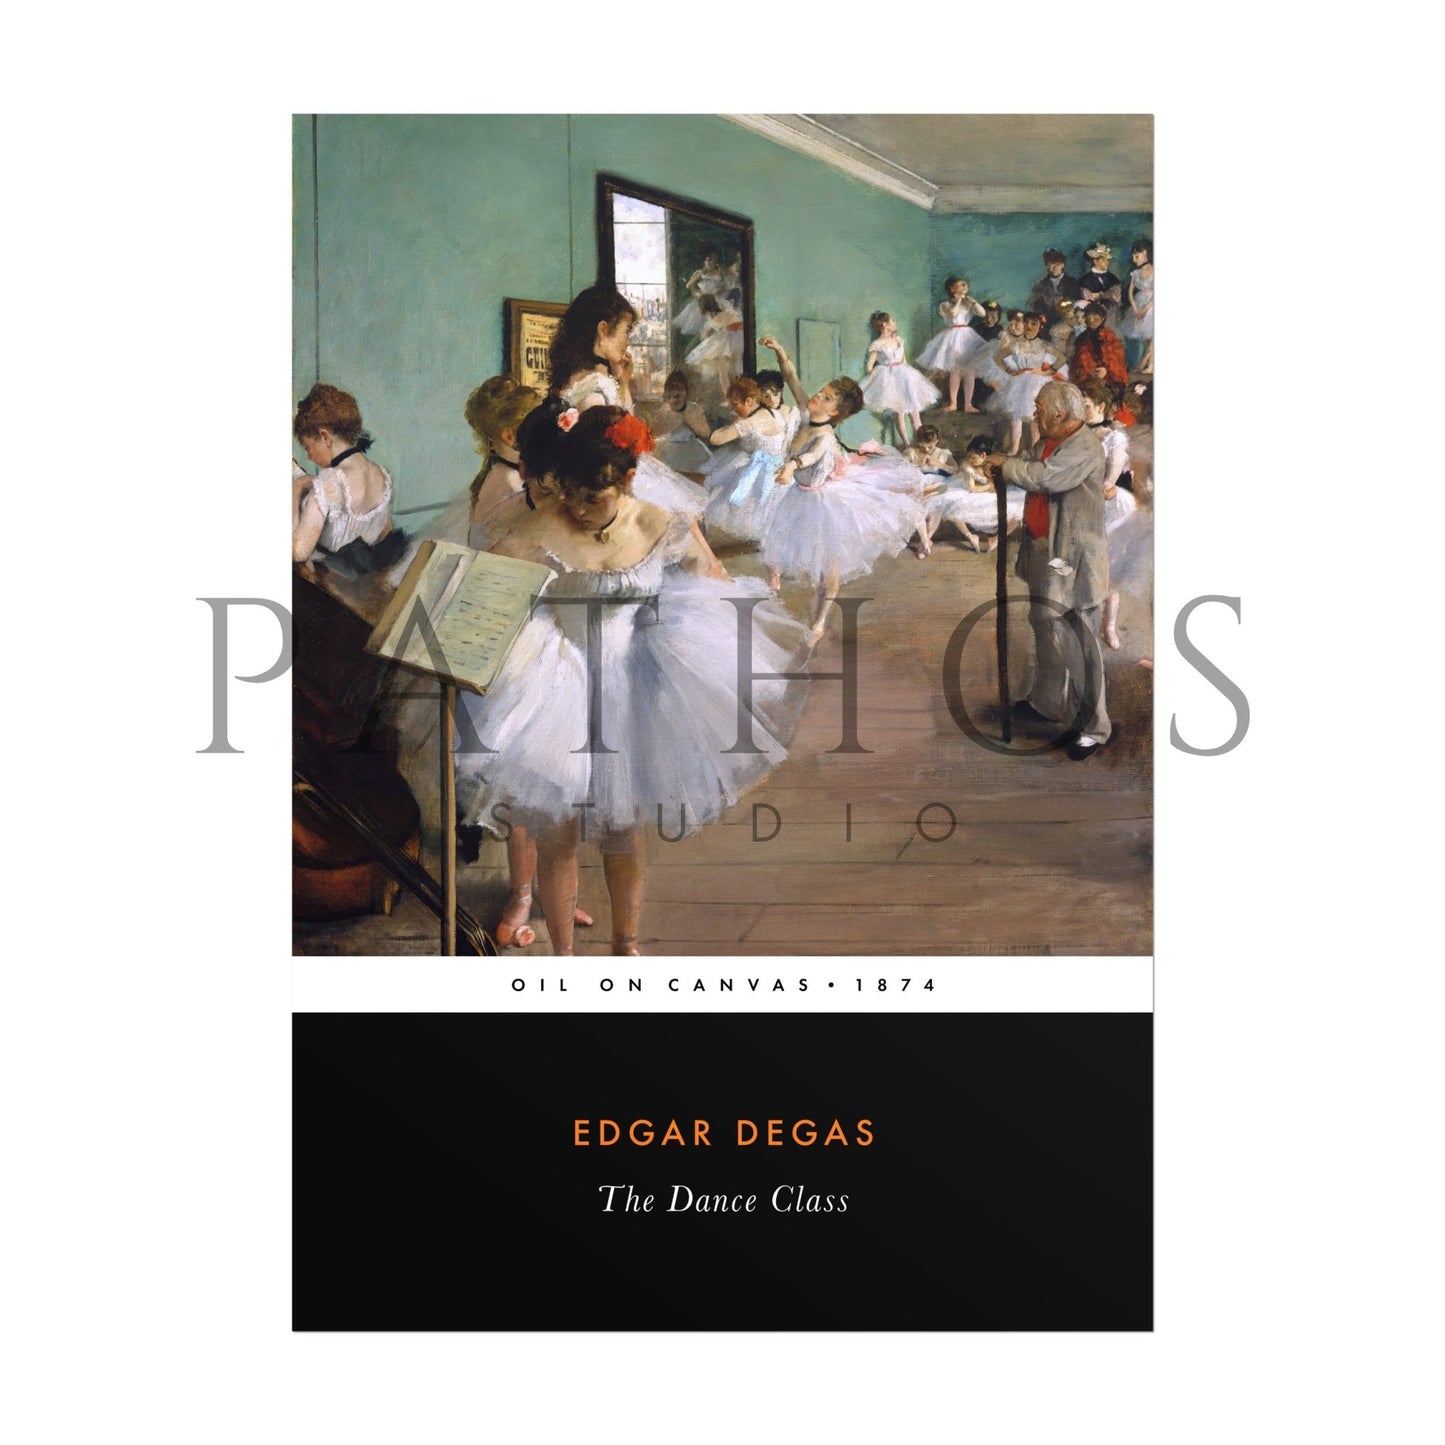 EDWARD DEGAS - The Dance Class (Vintage Classic Style) - Pathos Studio - Art Prints